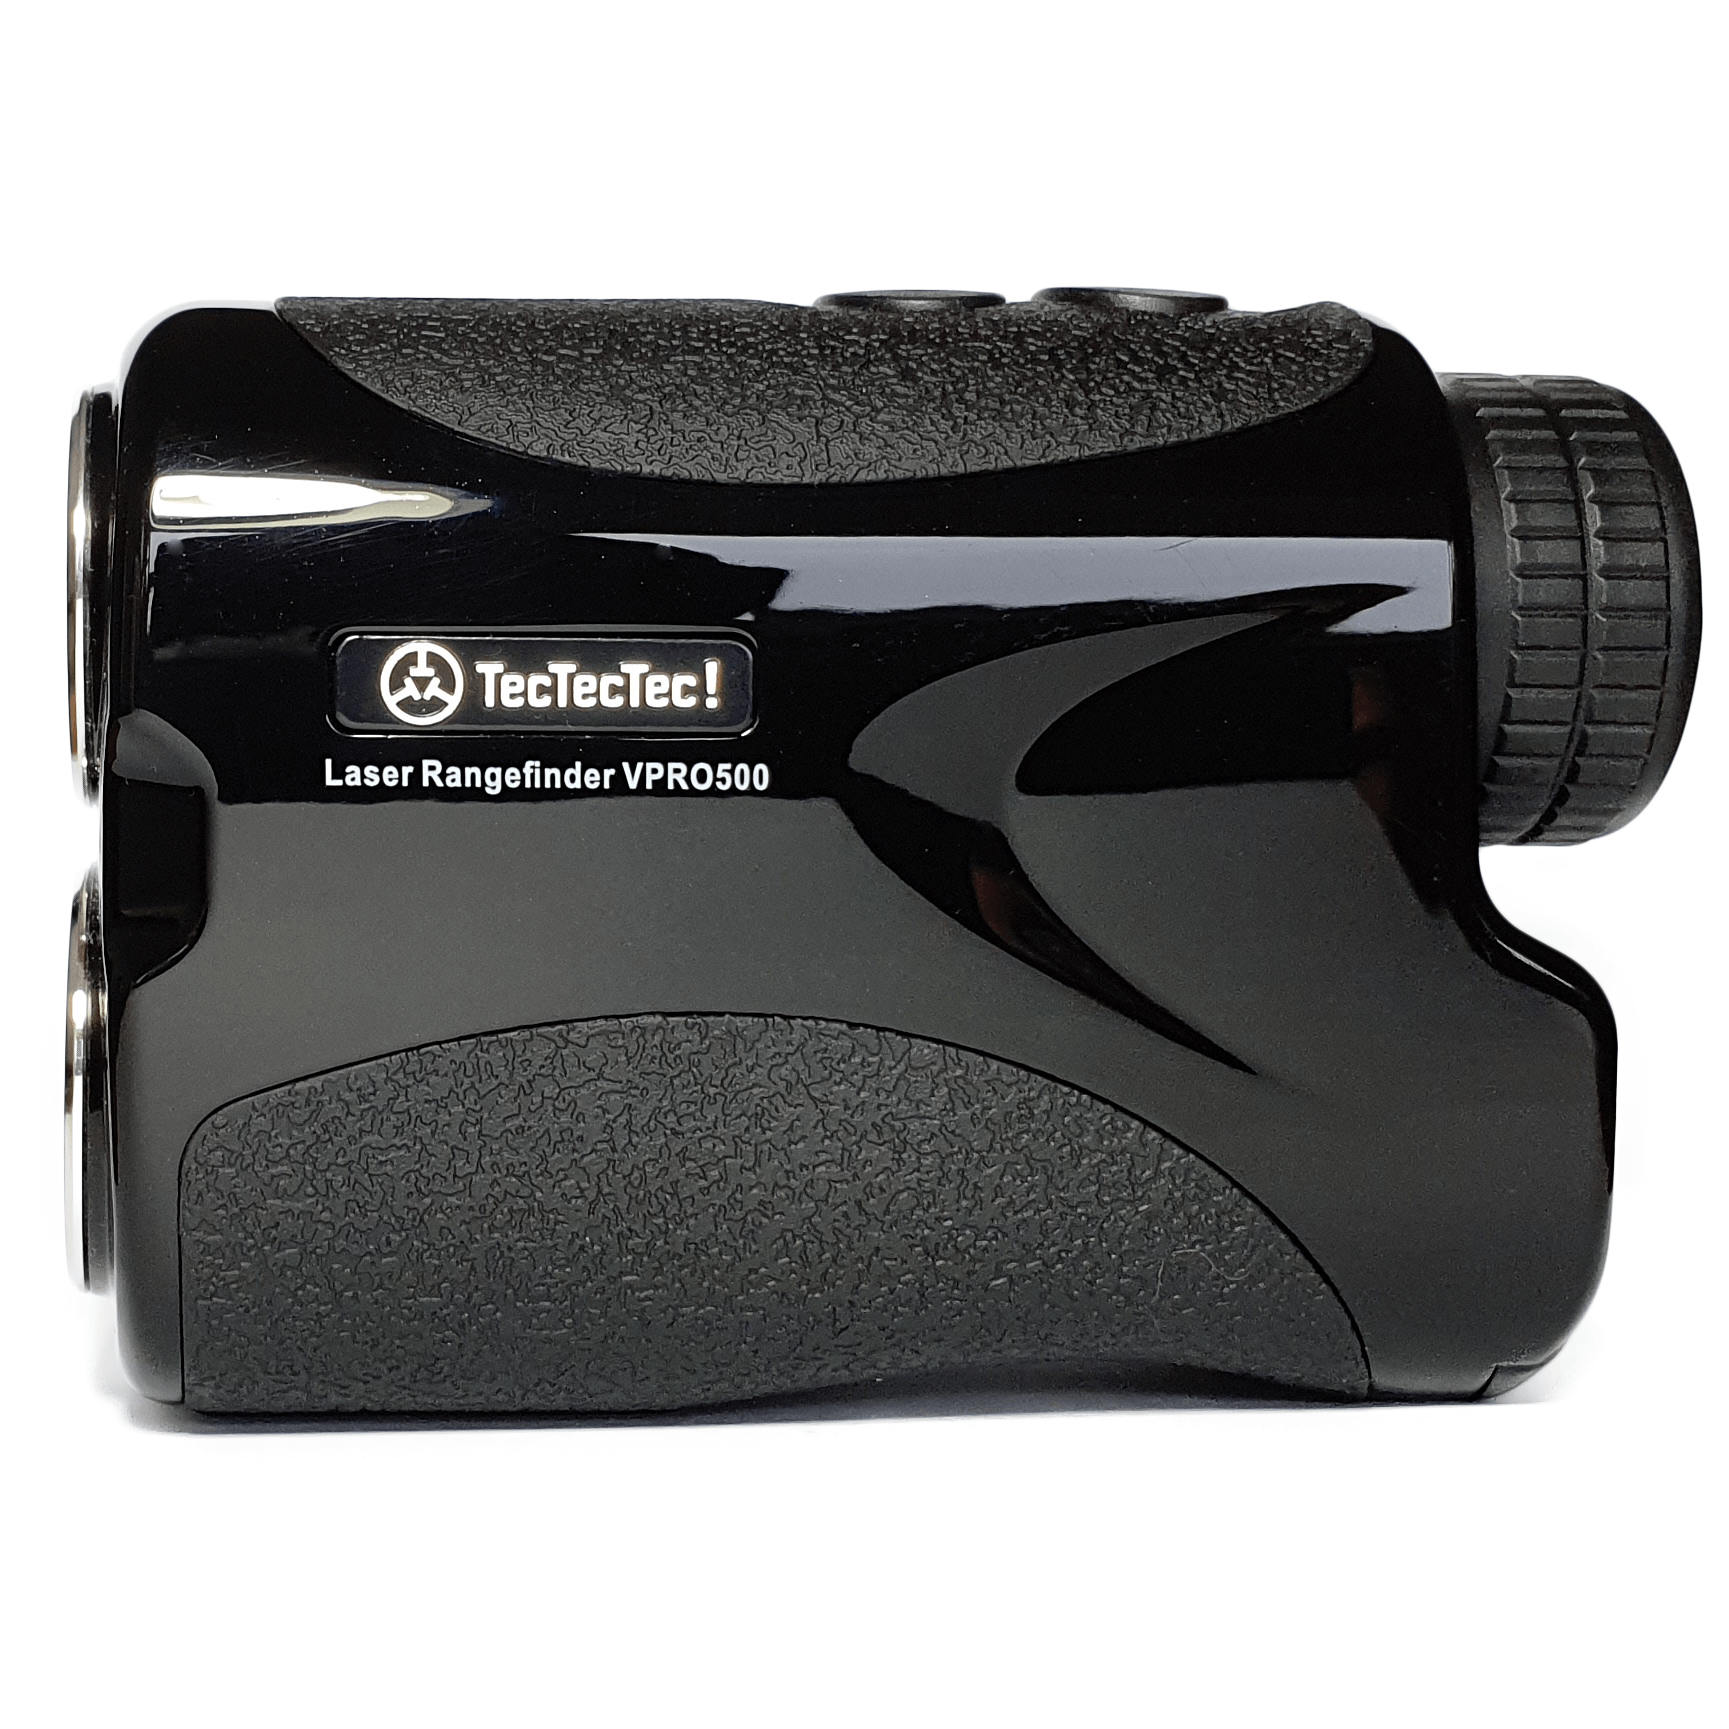 Golf Rangefinder VPRO500 TecTecTec - Laser measurement up to 540 yd